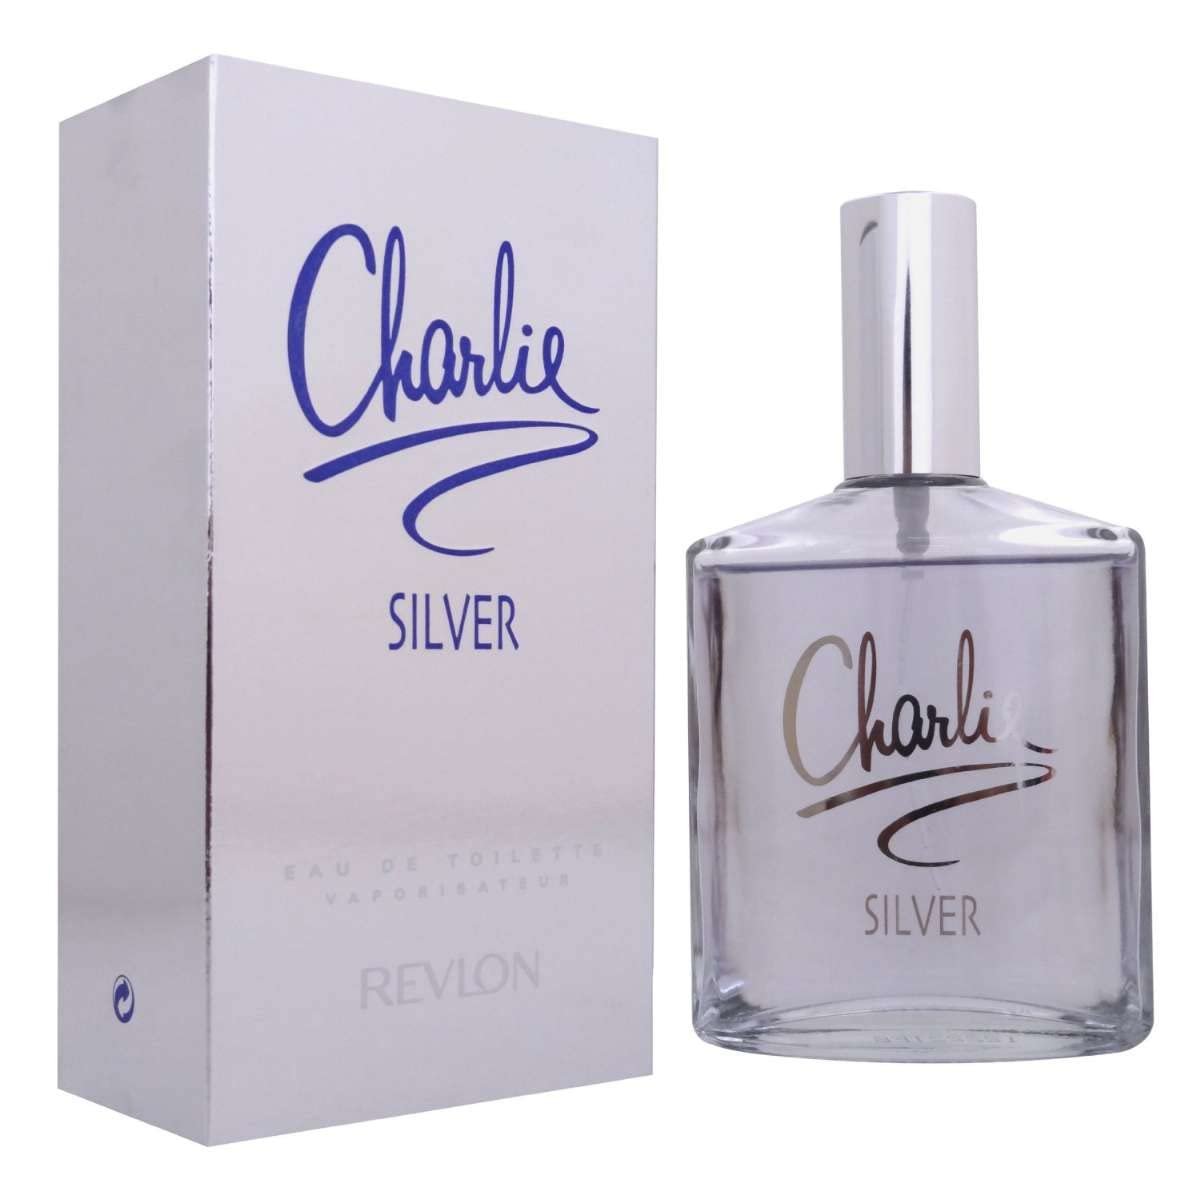 Charlie Silver by Revlon, 100ml